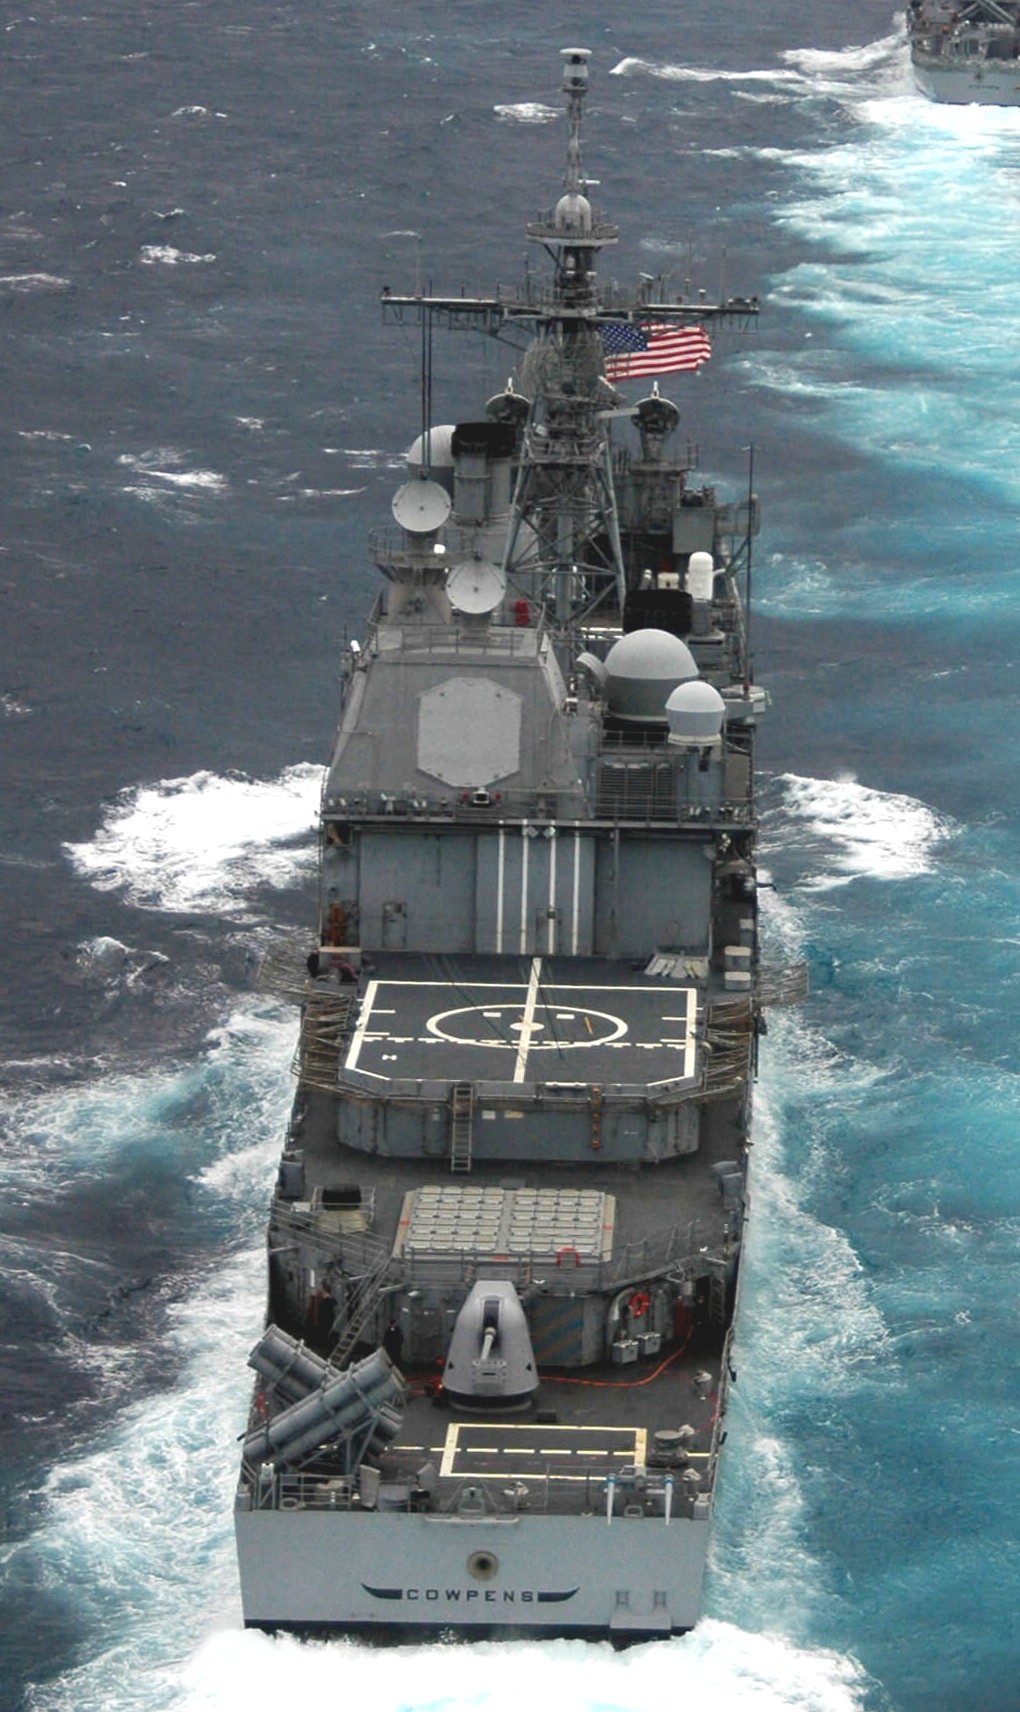 cg-63 uss cowpens ticonderoga class guided missile cruiser aegis us navy 19